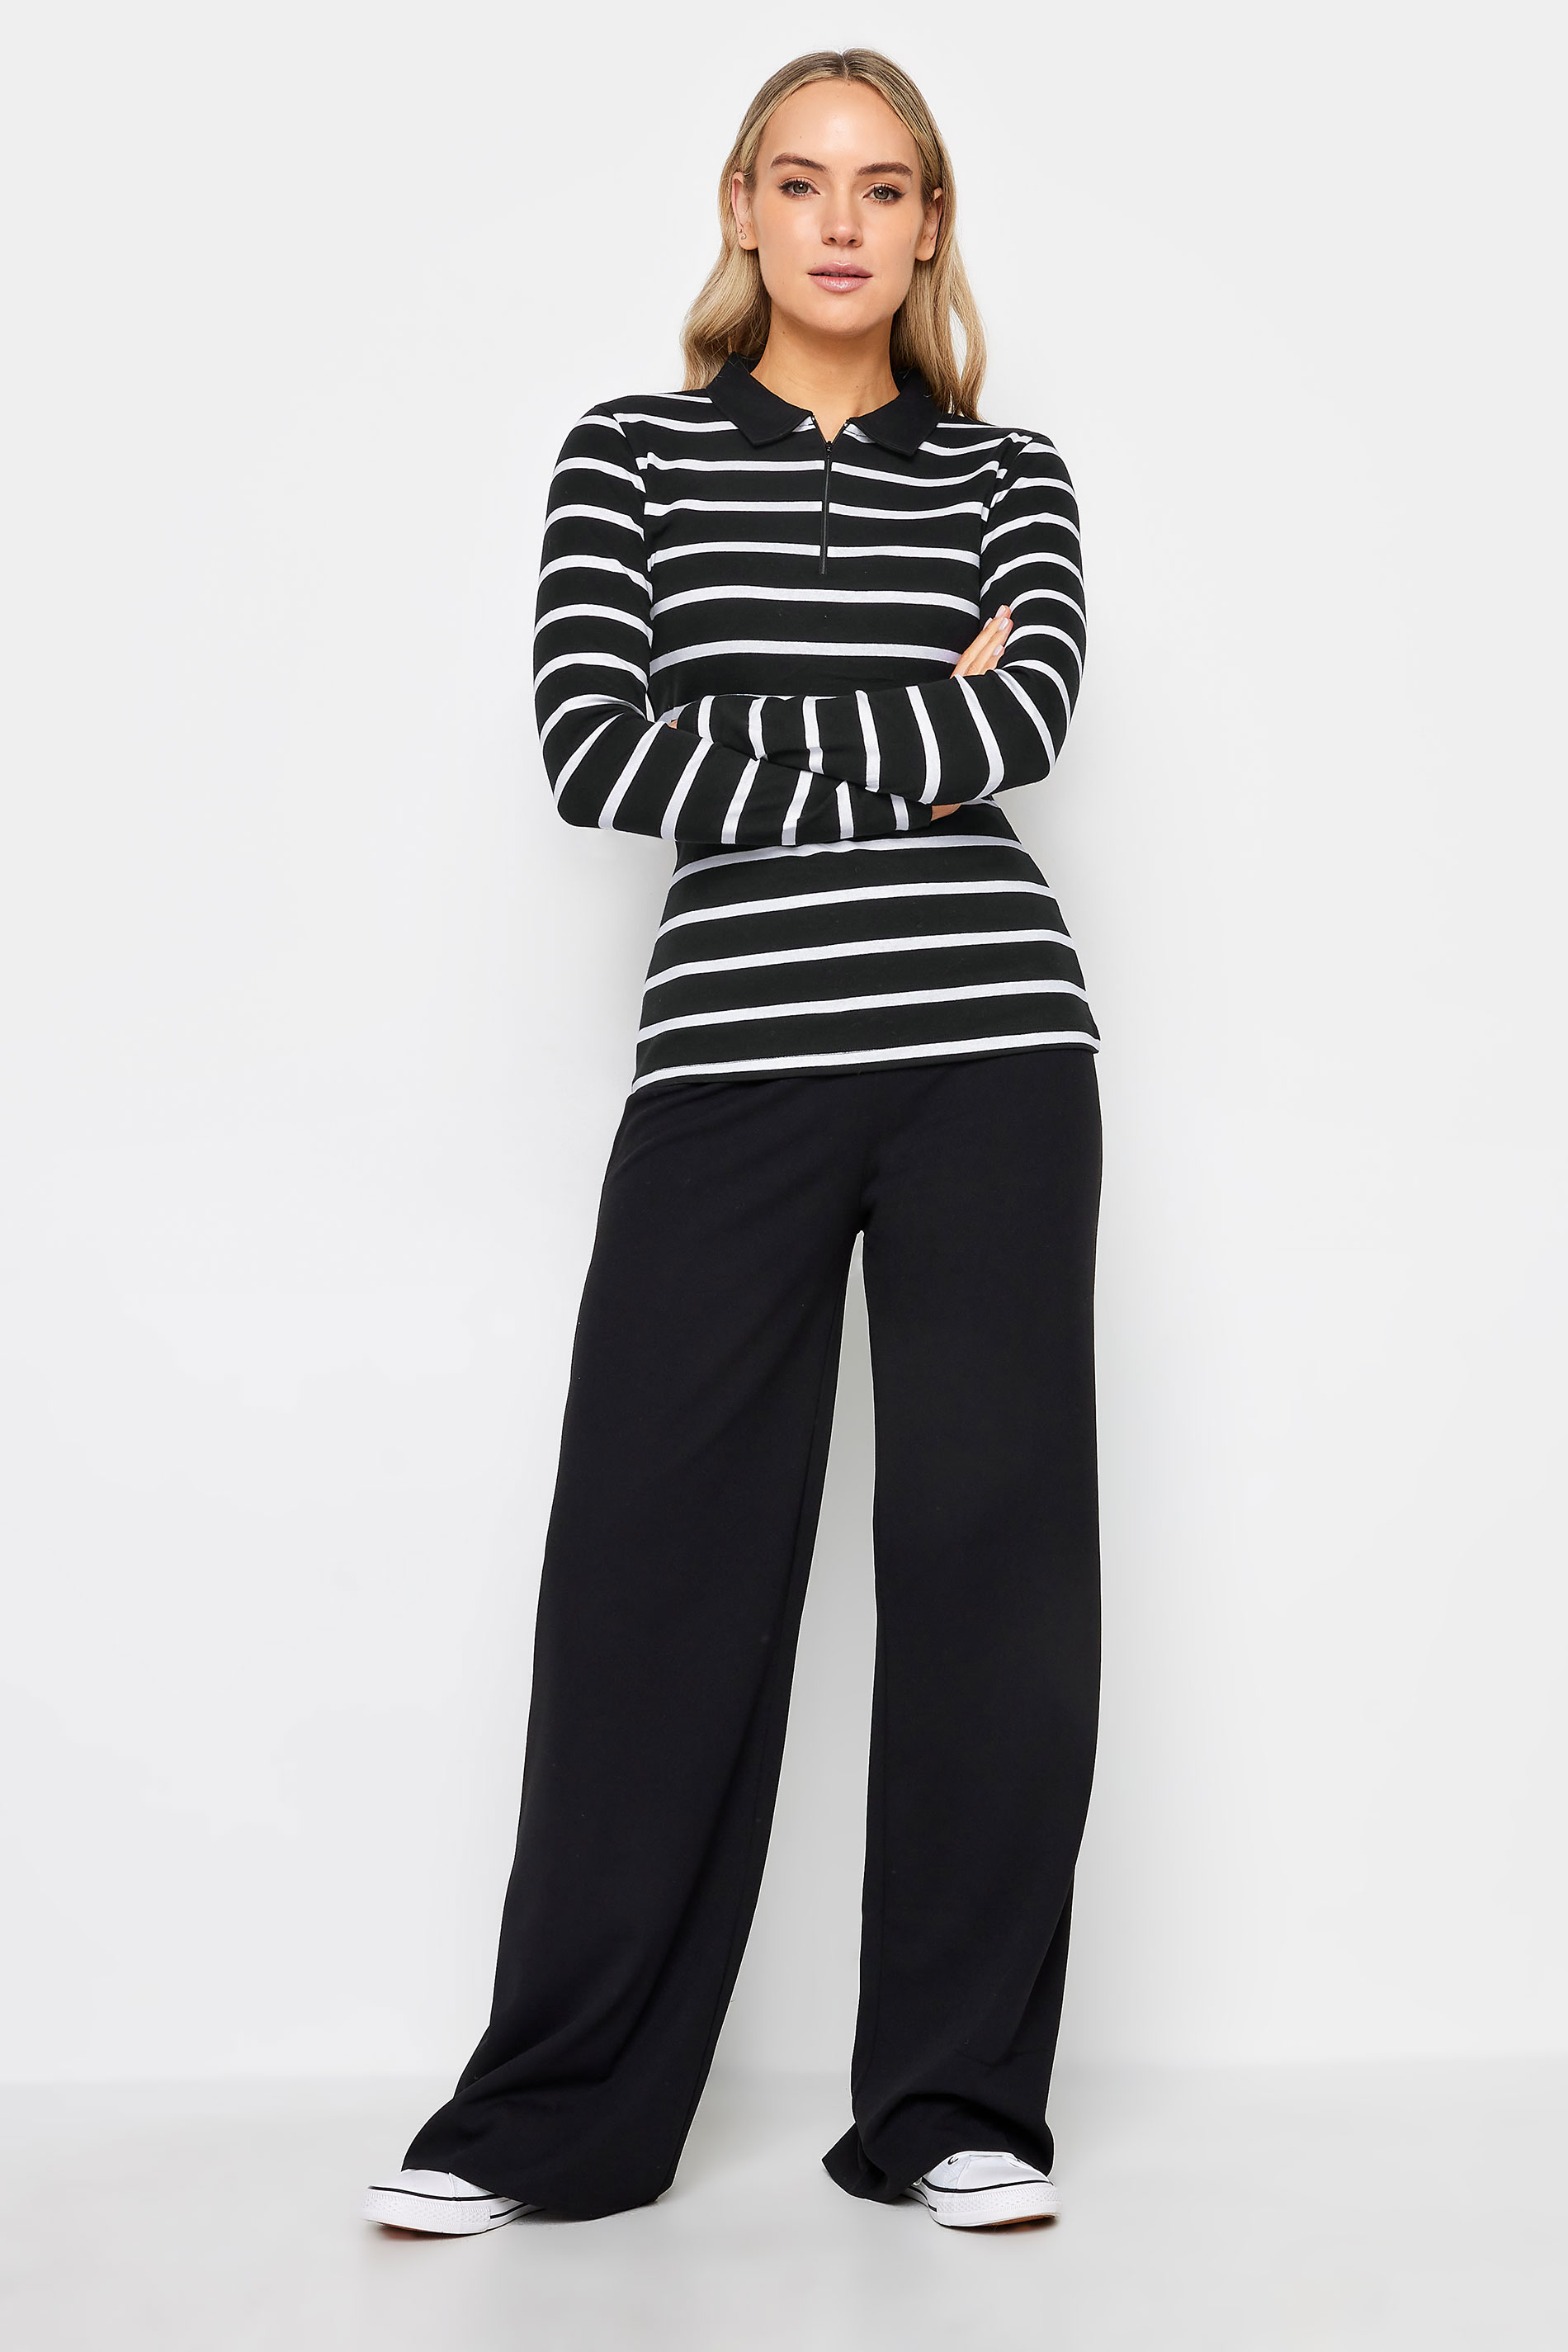 LTS Tall Women's Black Stripe Print Polo Collar Top | Long Tall Sally 2